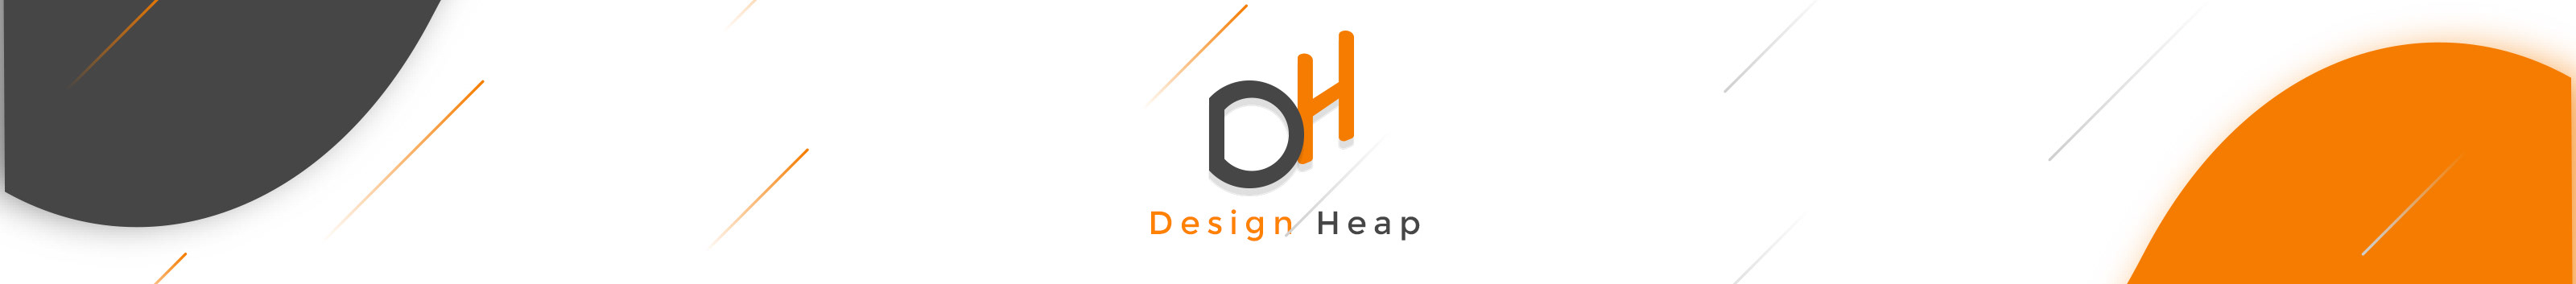 Design Heap's profile banner